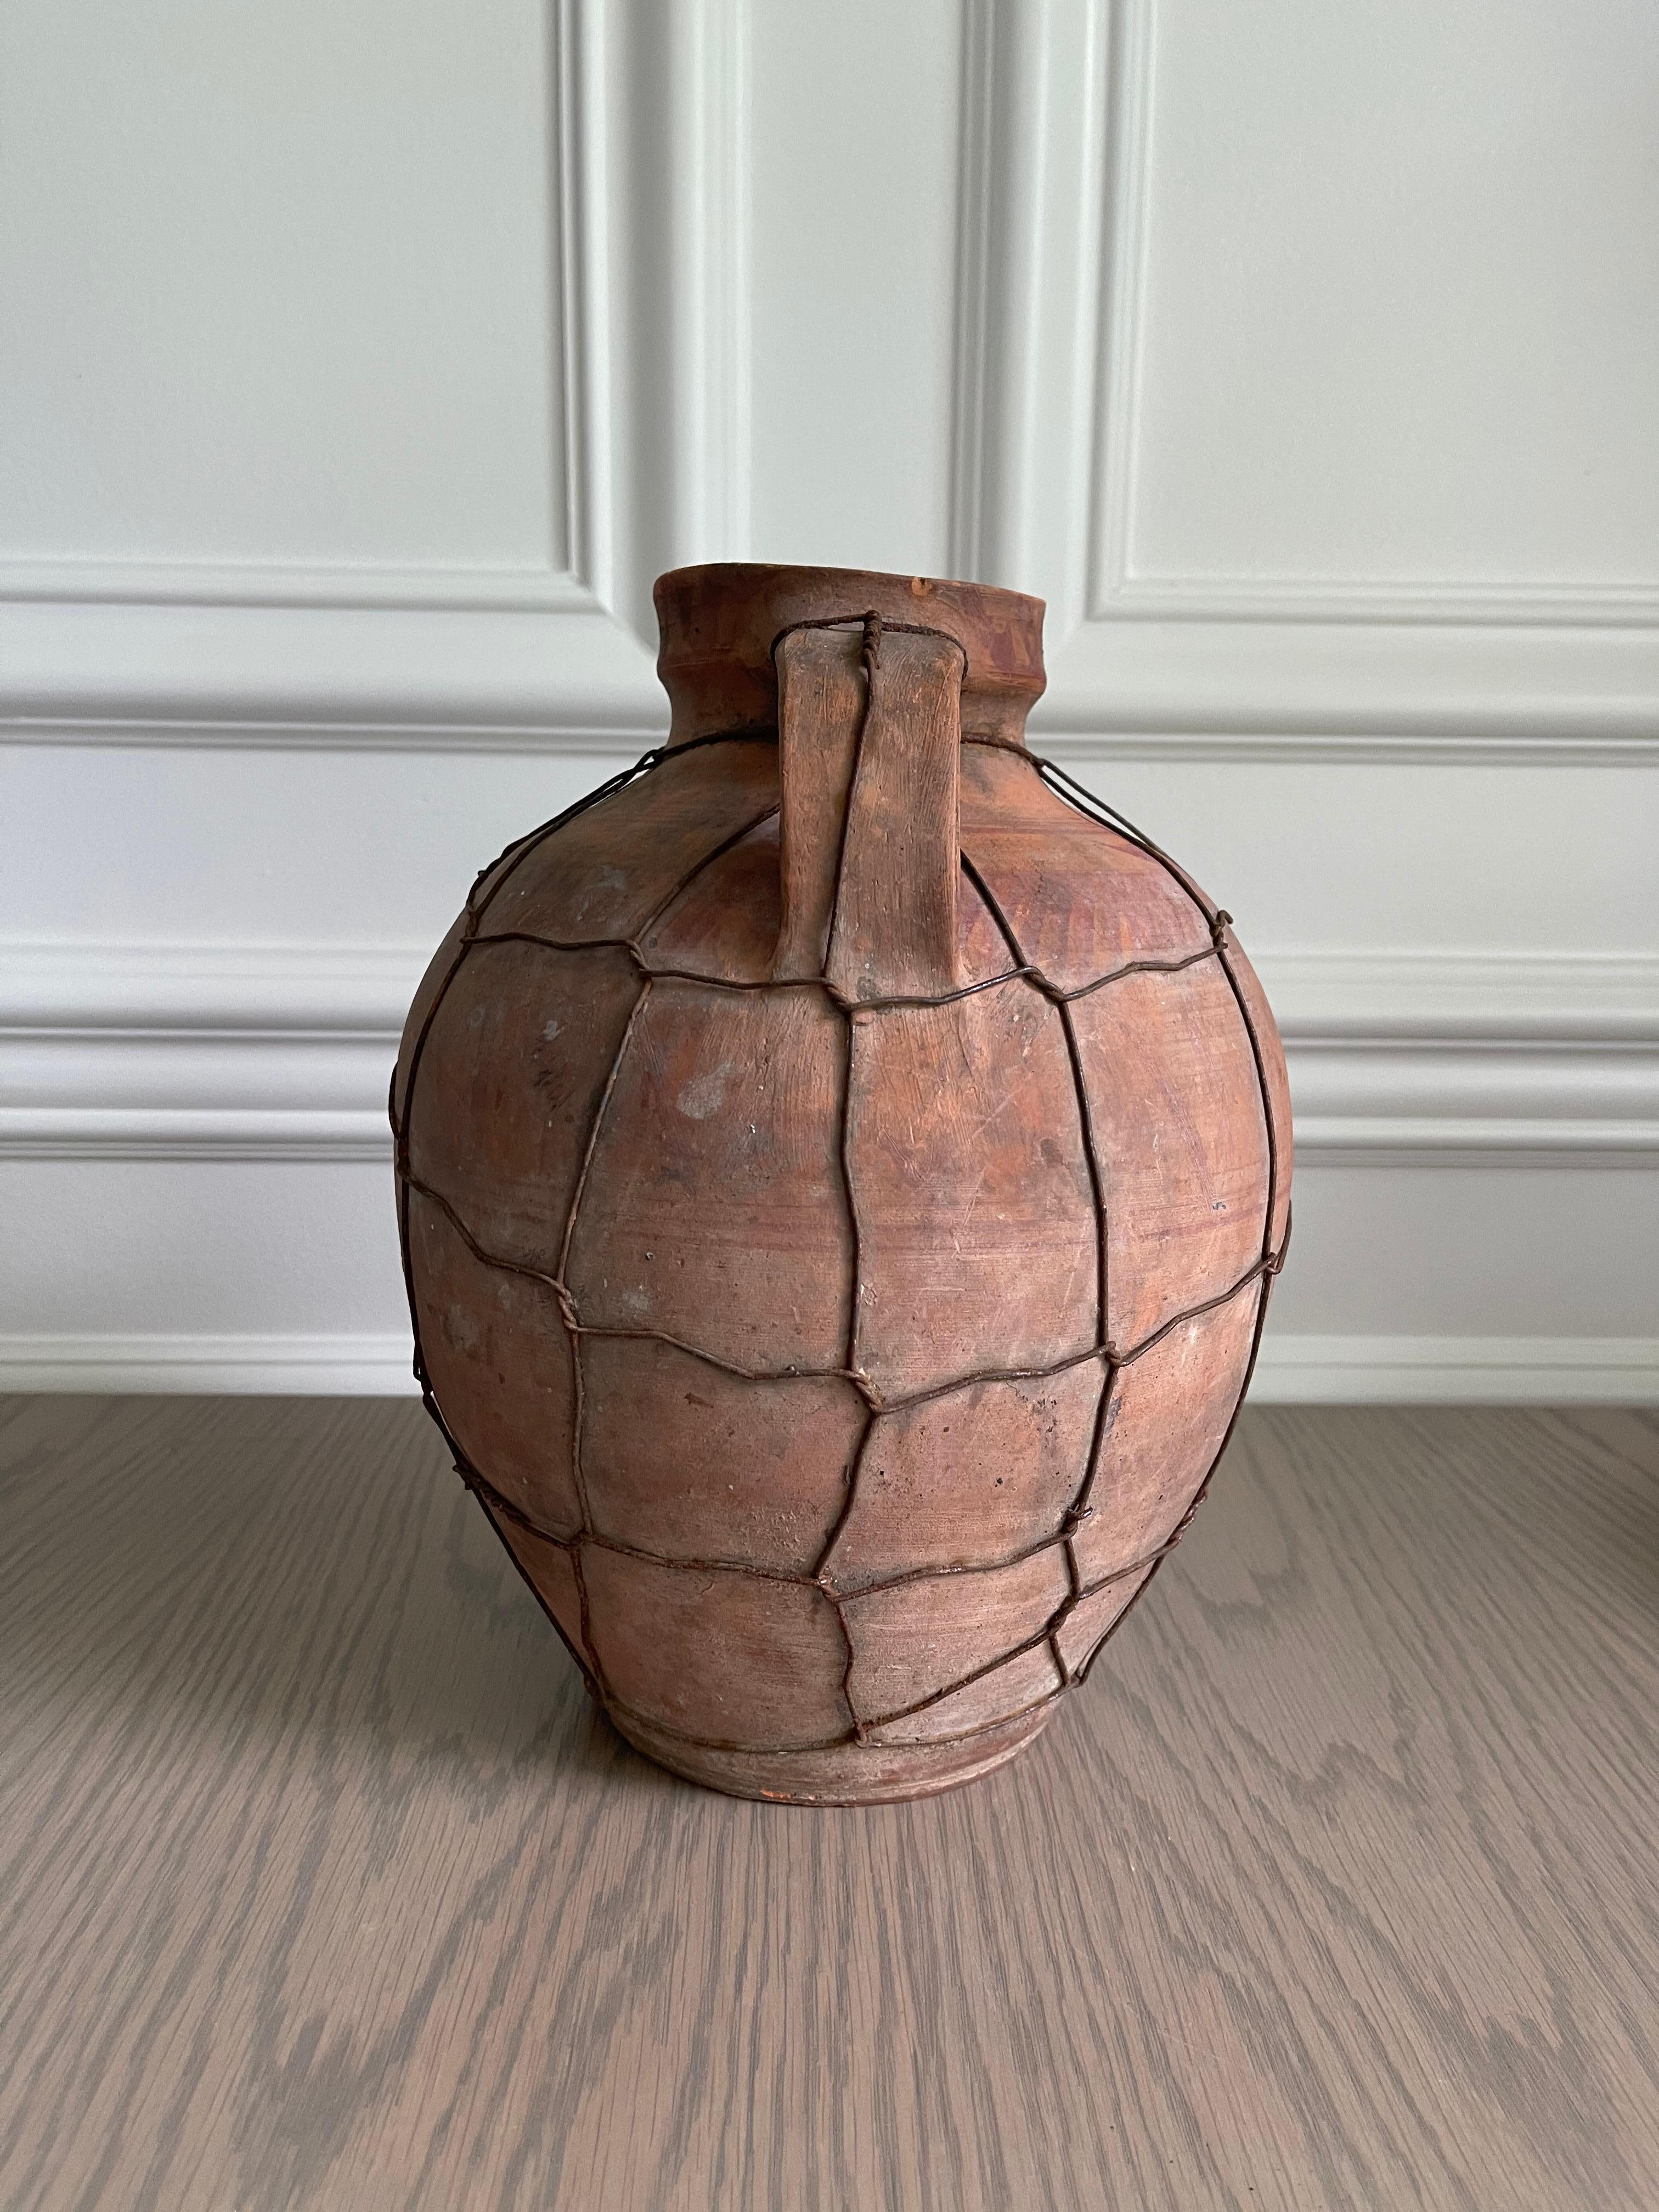 Beautiful antique terracotta vessel with handle c. 1900s. Originally used as a milk jug.